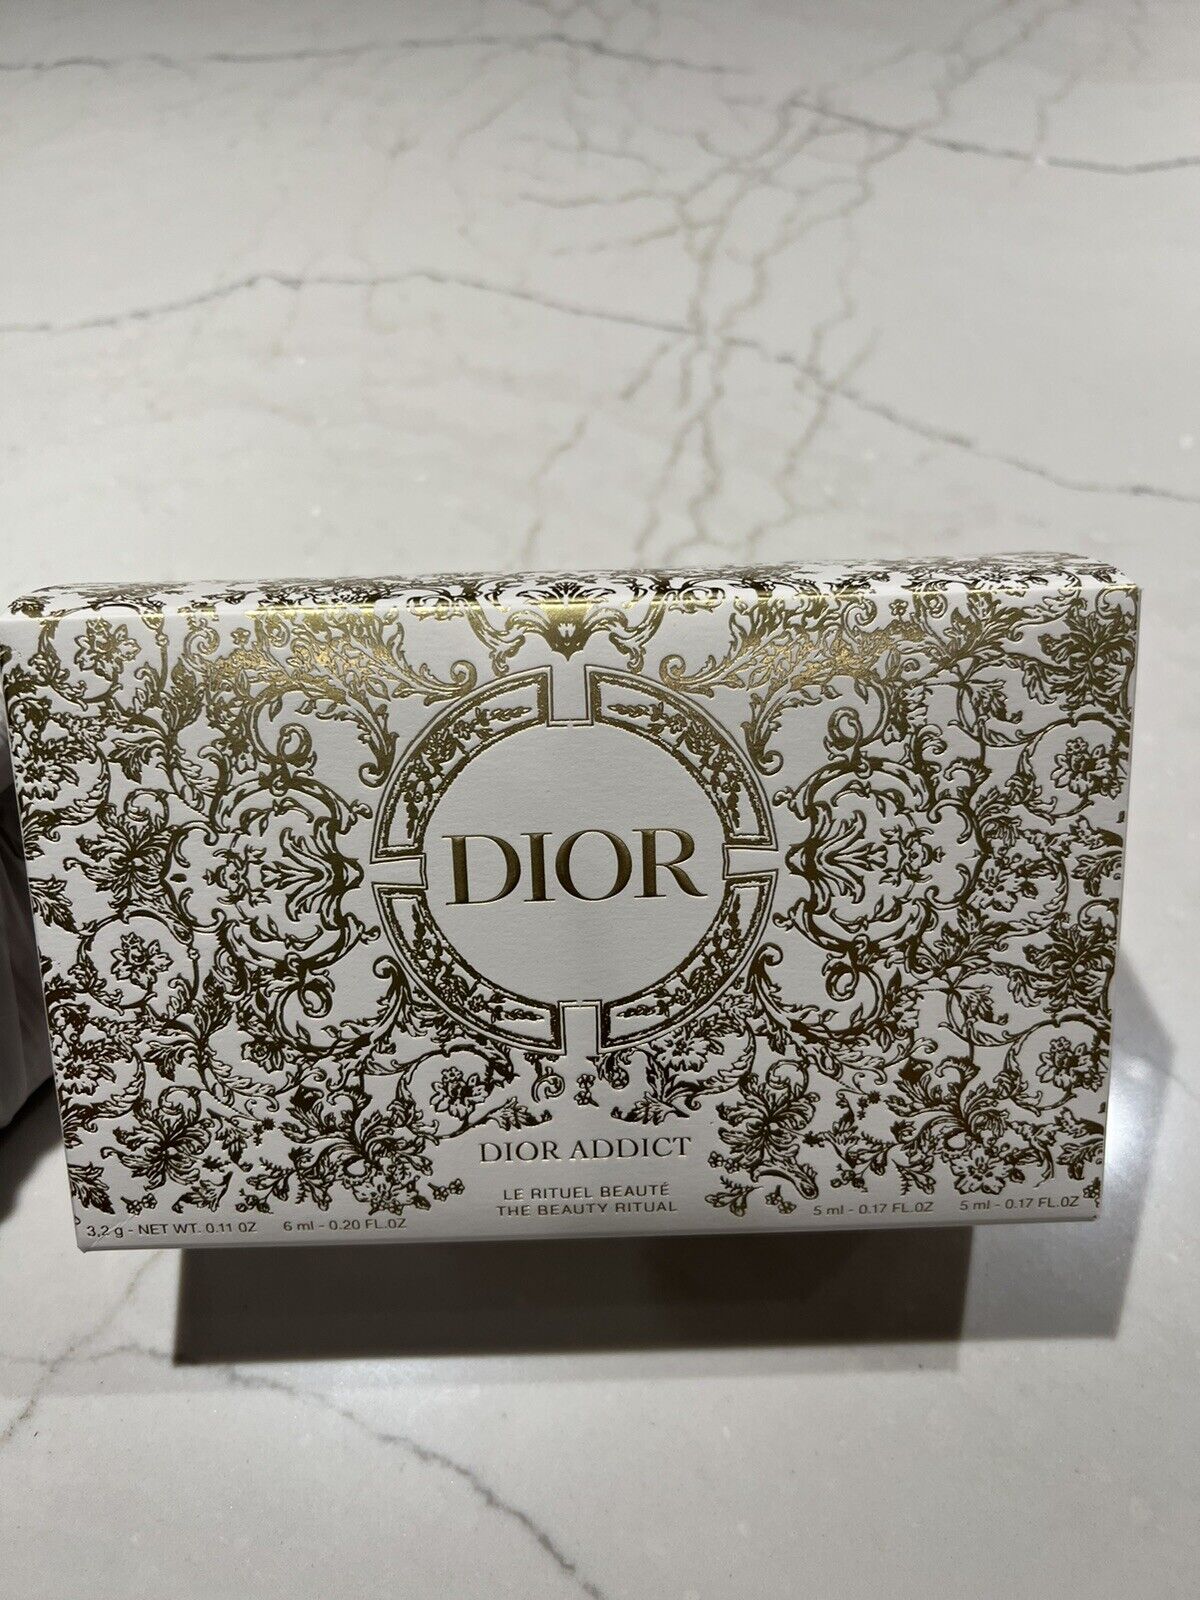 Dior Beauty Ritual Gift Set 5pc. Set: Miss Dior, Capture Totale, Dior Addict. Dior Addict